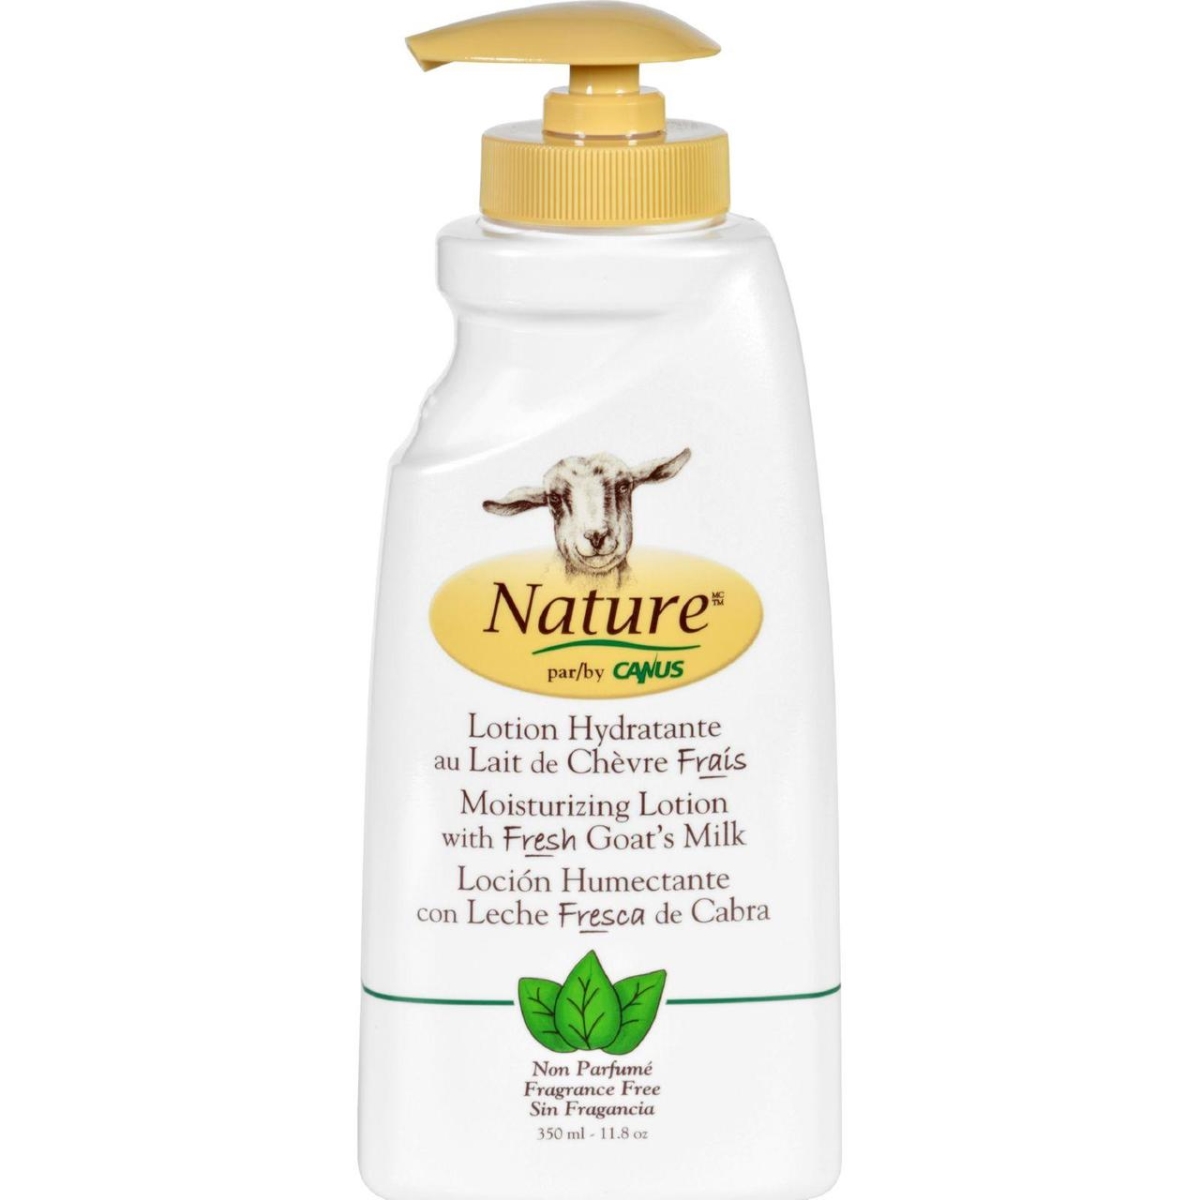 Hg1554682 11.8 Oz Lotion Goats Milk, Nature - Fragrance Free